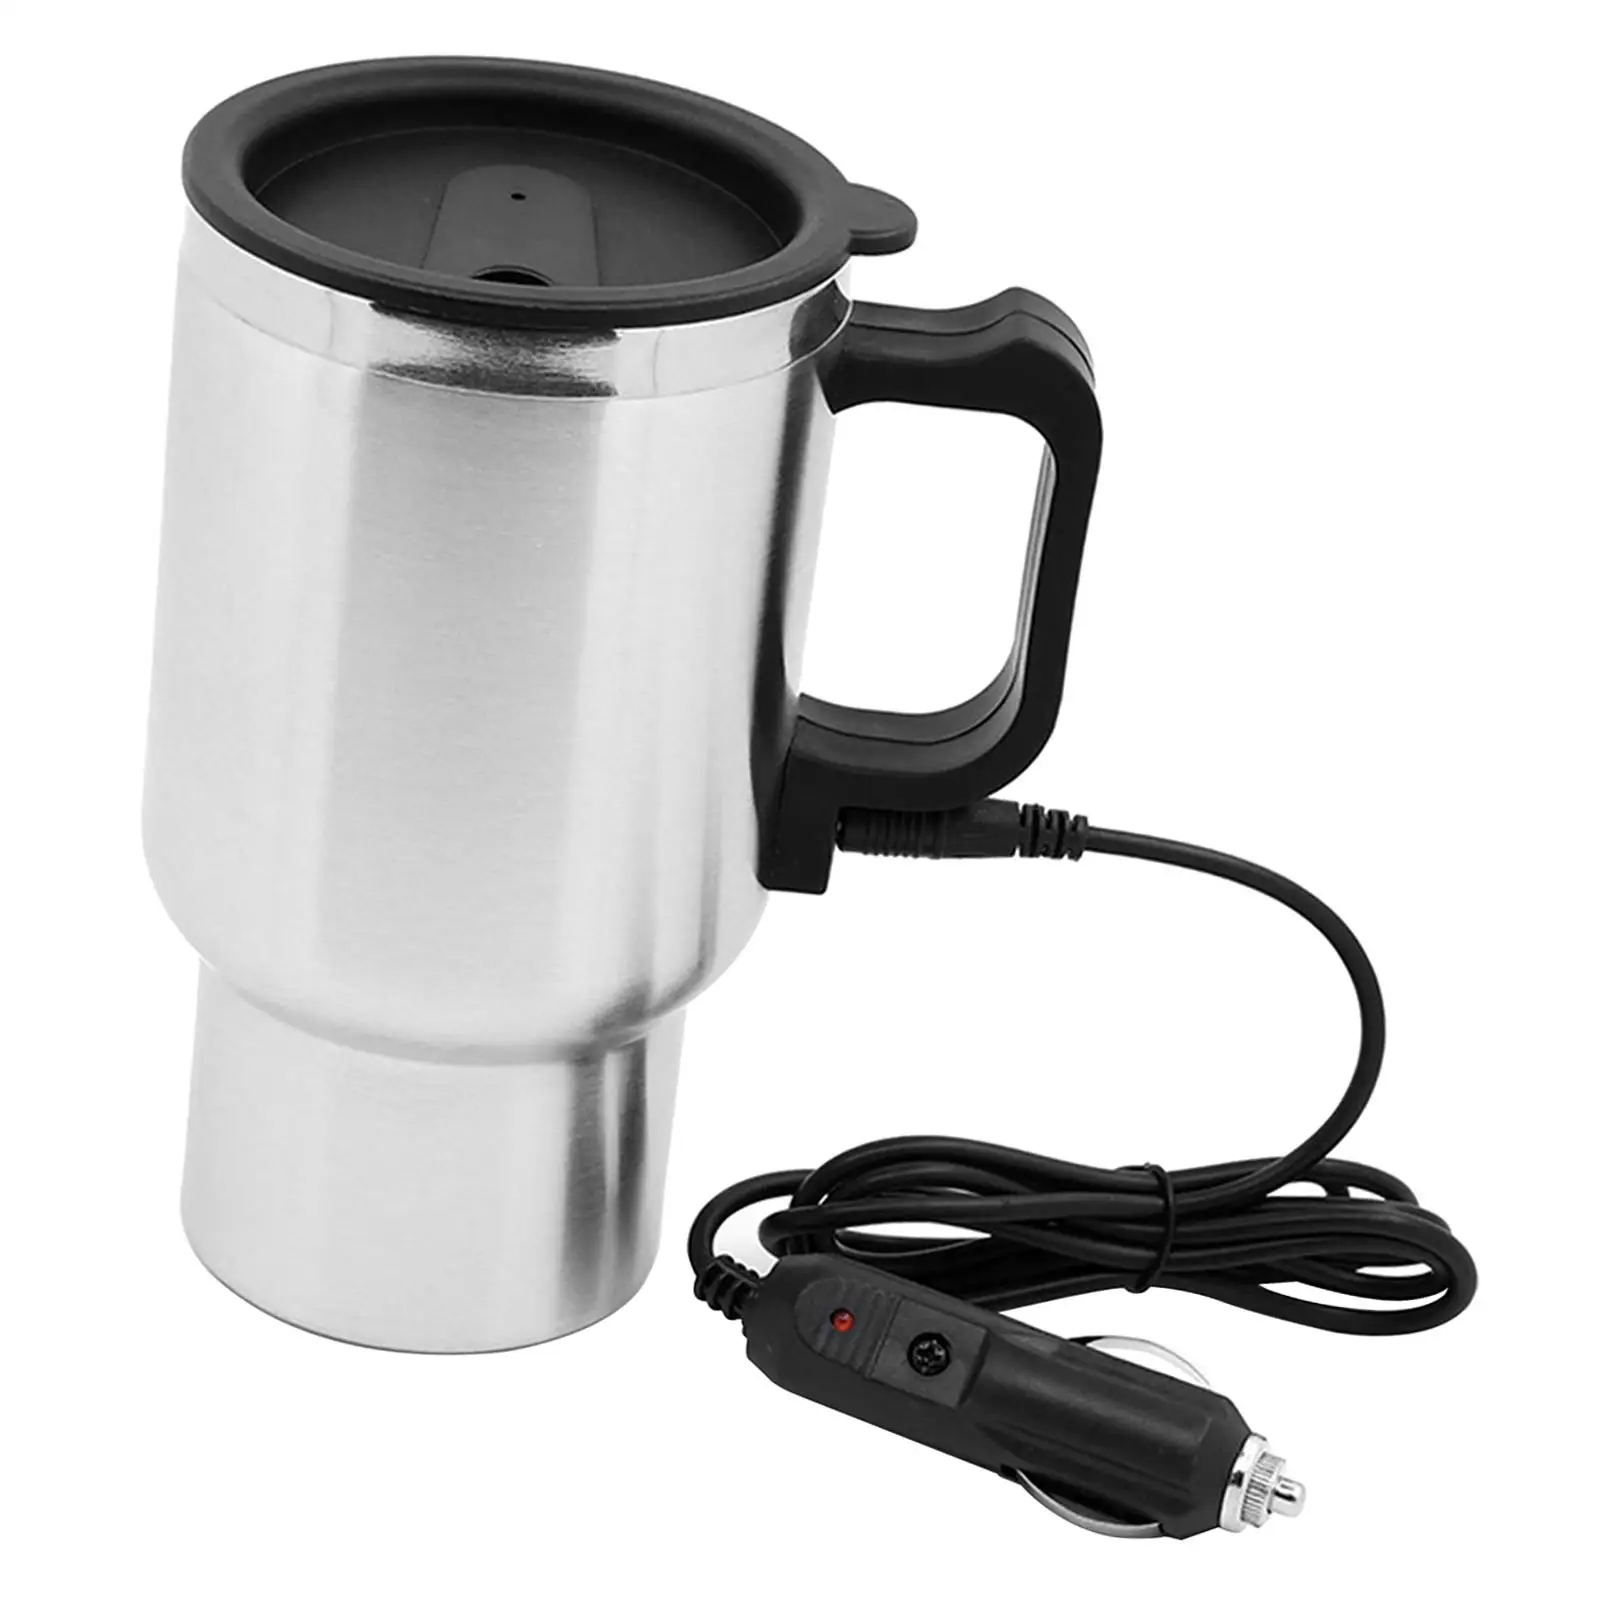 Car Heating Cup 500ml Heater Coffee Cup for Tea Milk Heating Water Cars Trucks